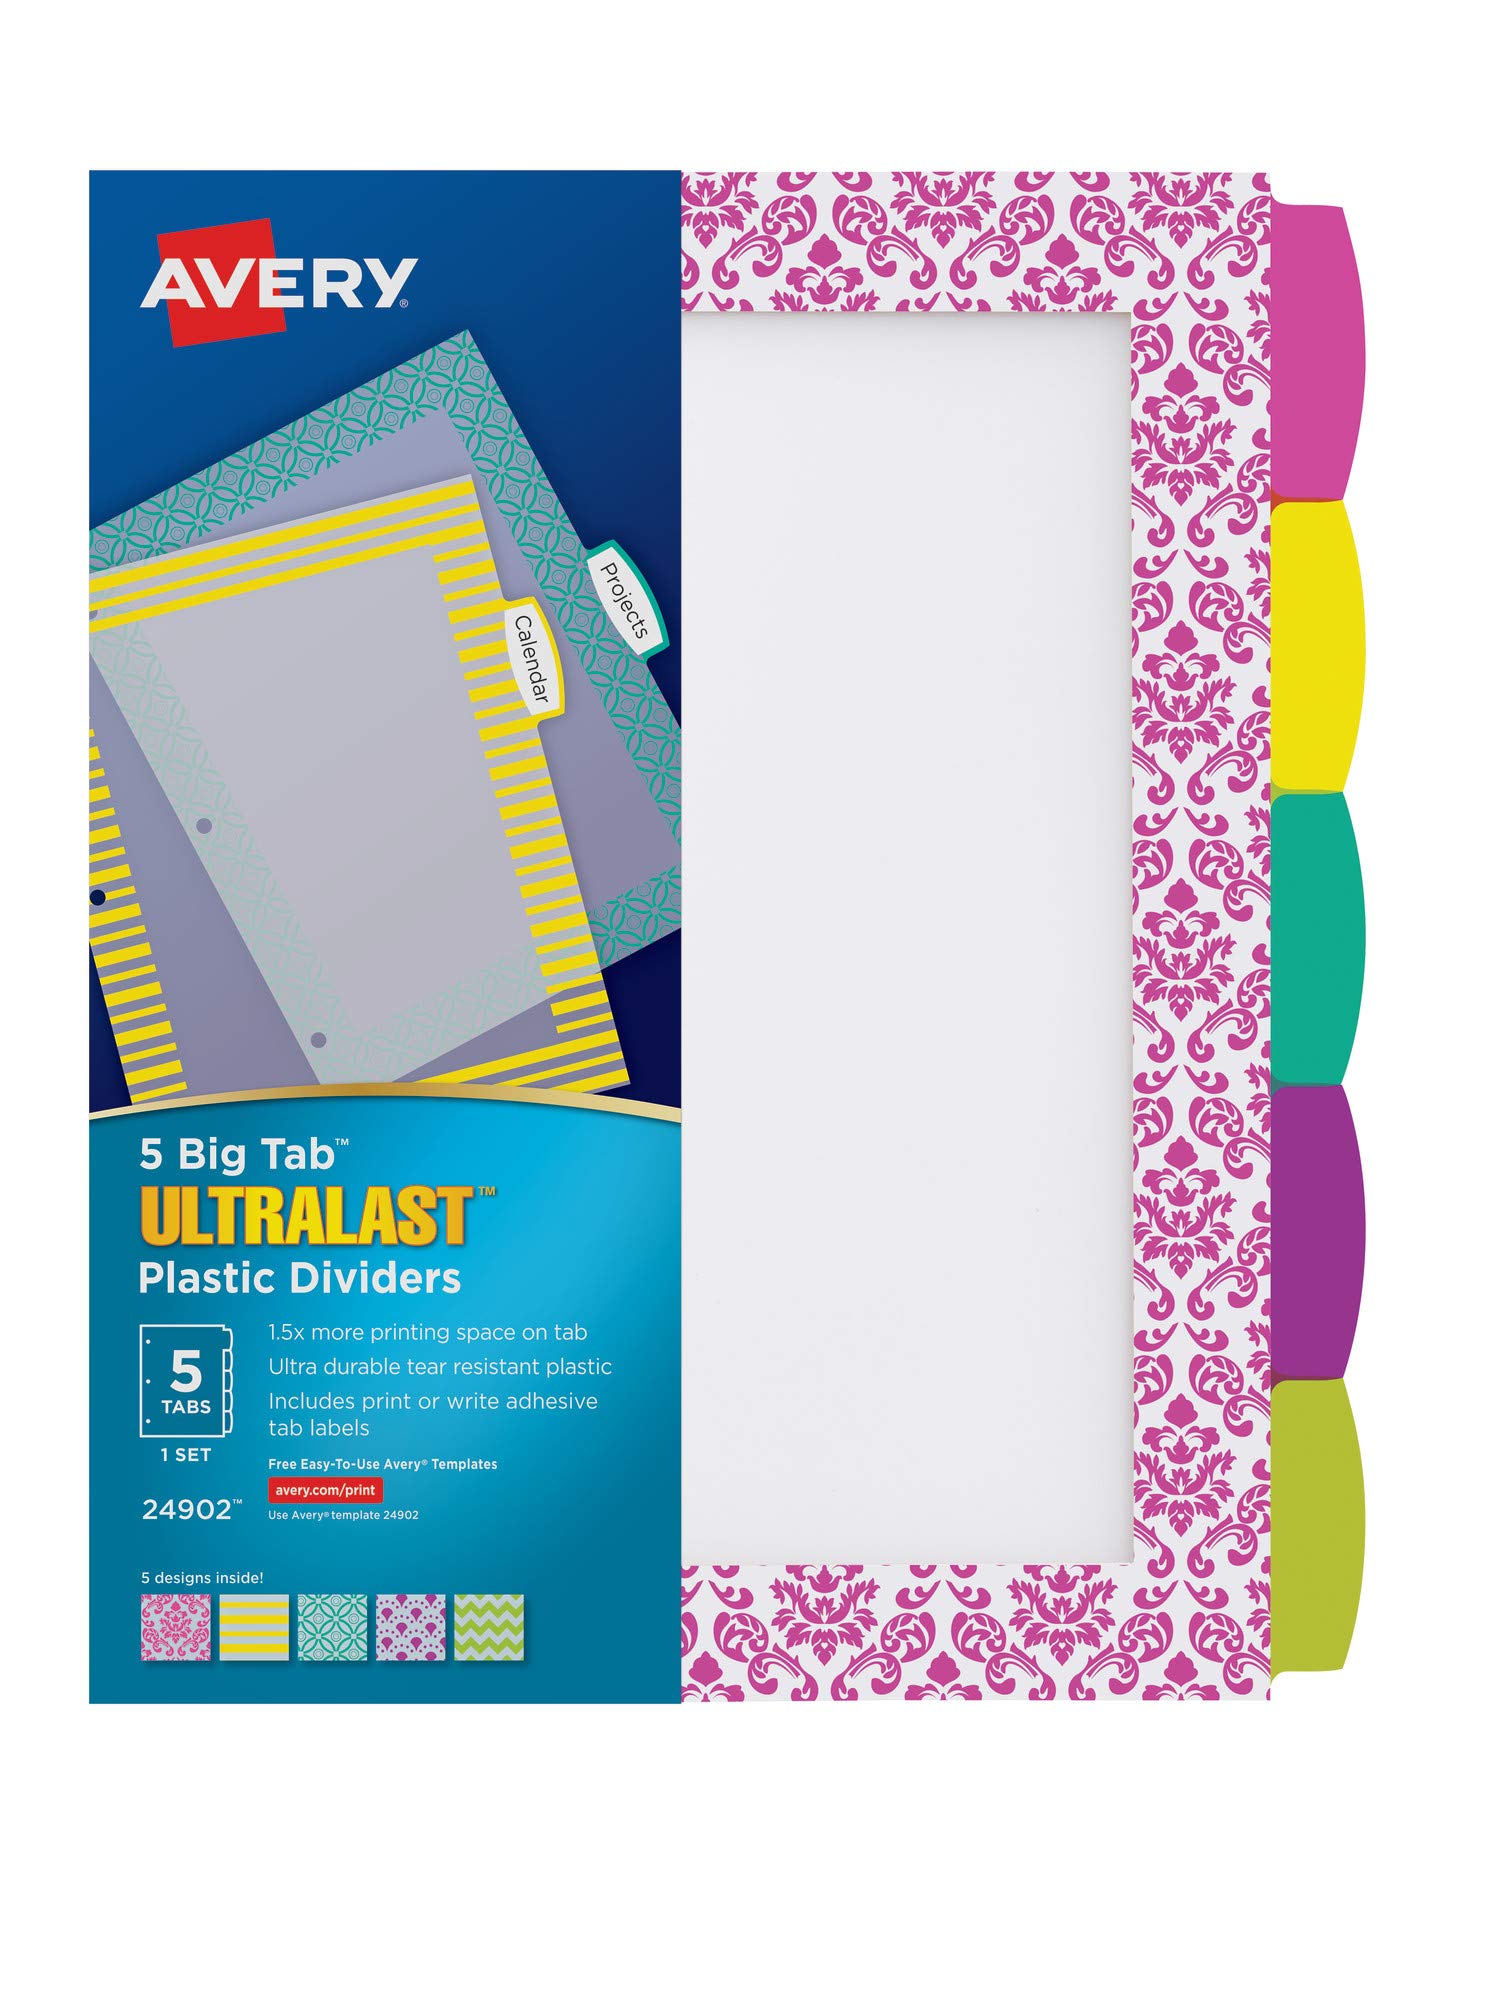 Avery 8 个标签 Ultralast 塑料活页夹分隔件多色大标签 1 套 24901 6...